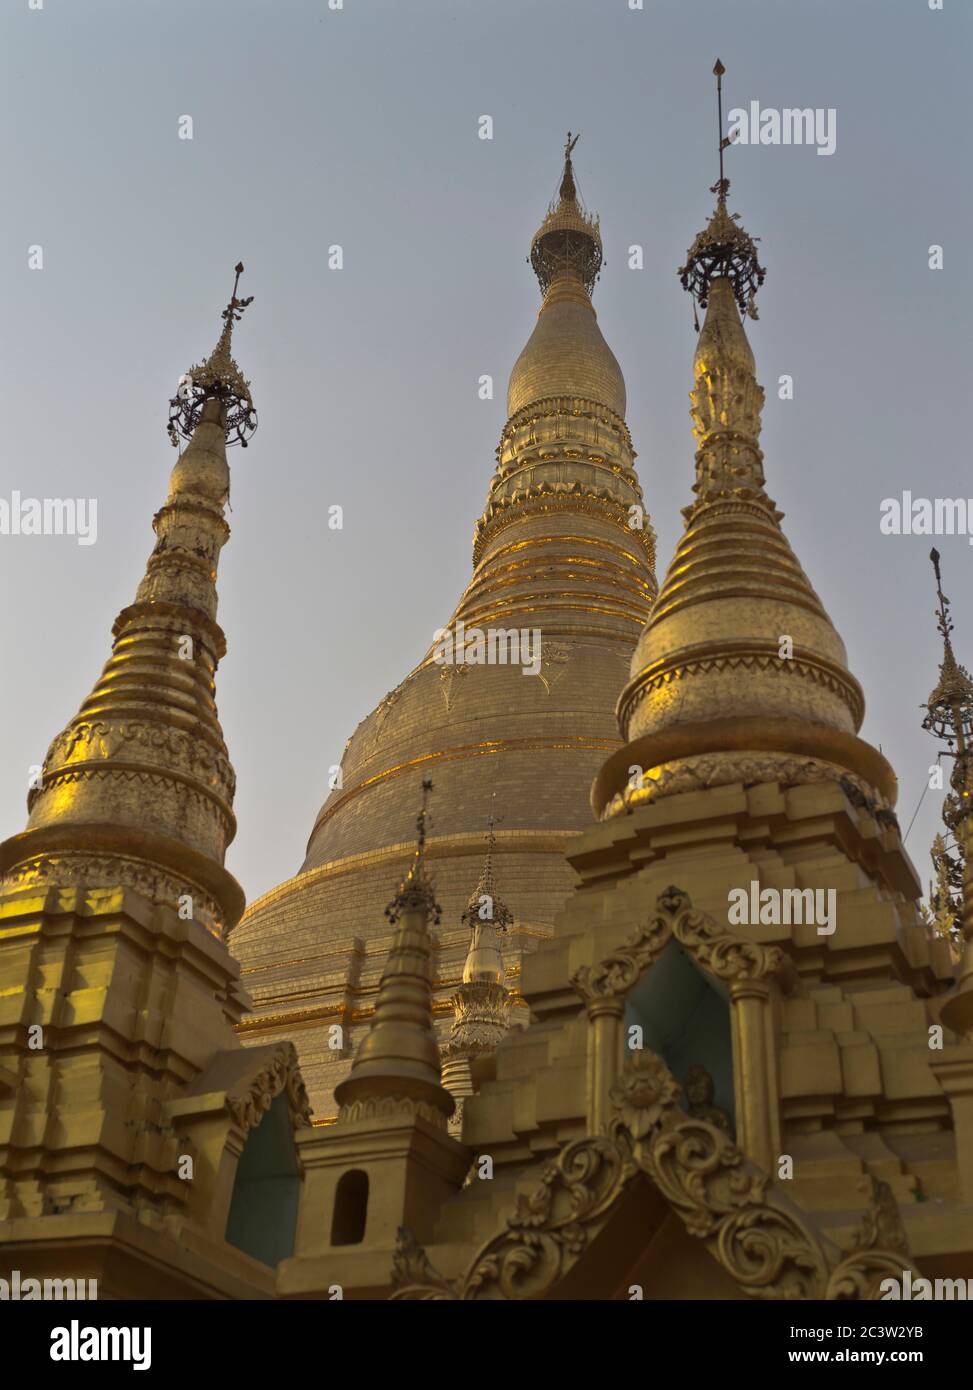 dh Shwedagon Pagodentempel YANGON MYANMAR Burmesische buddhistische Tempel Great Dagon Zedi Daw goldener Stupa Blattgold Stockfoto